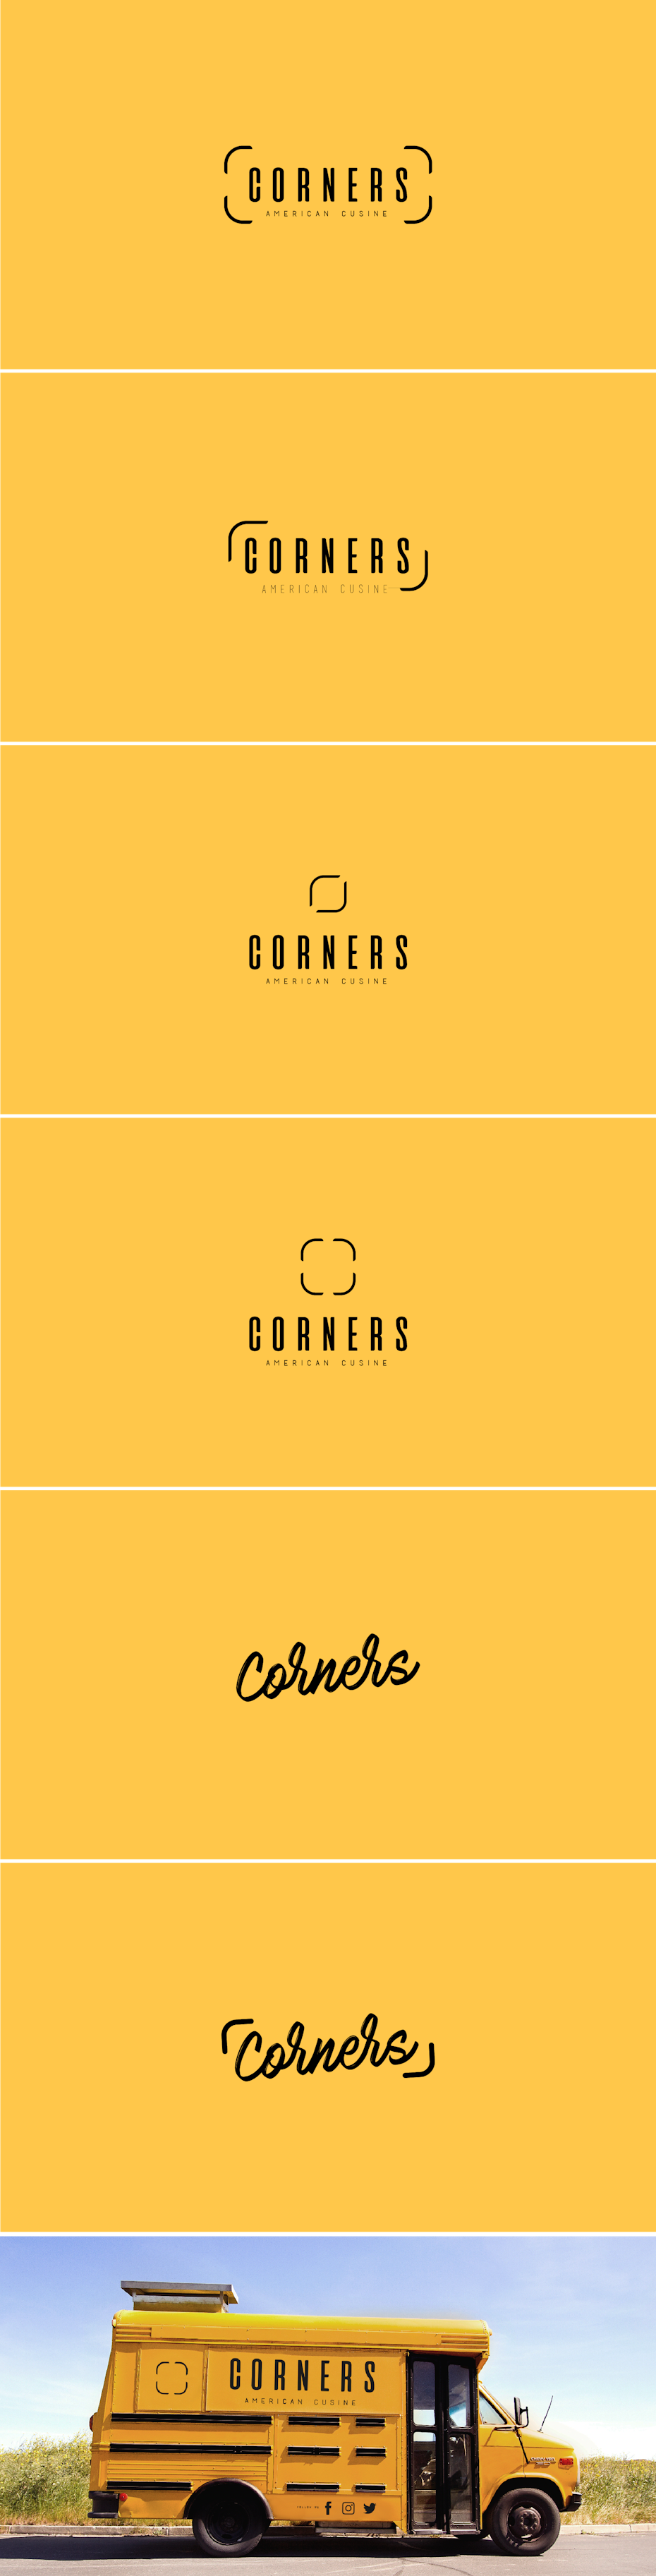 Corners American Cuisine logo